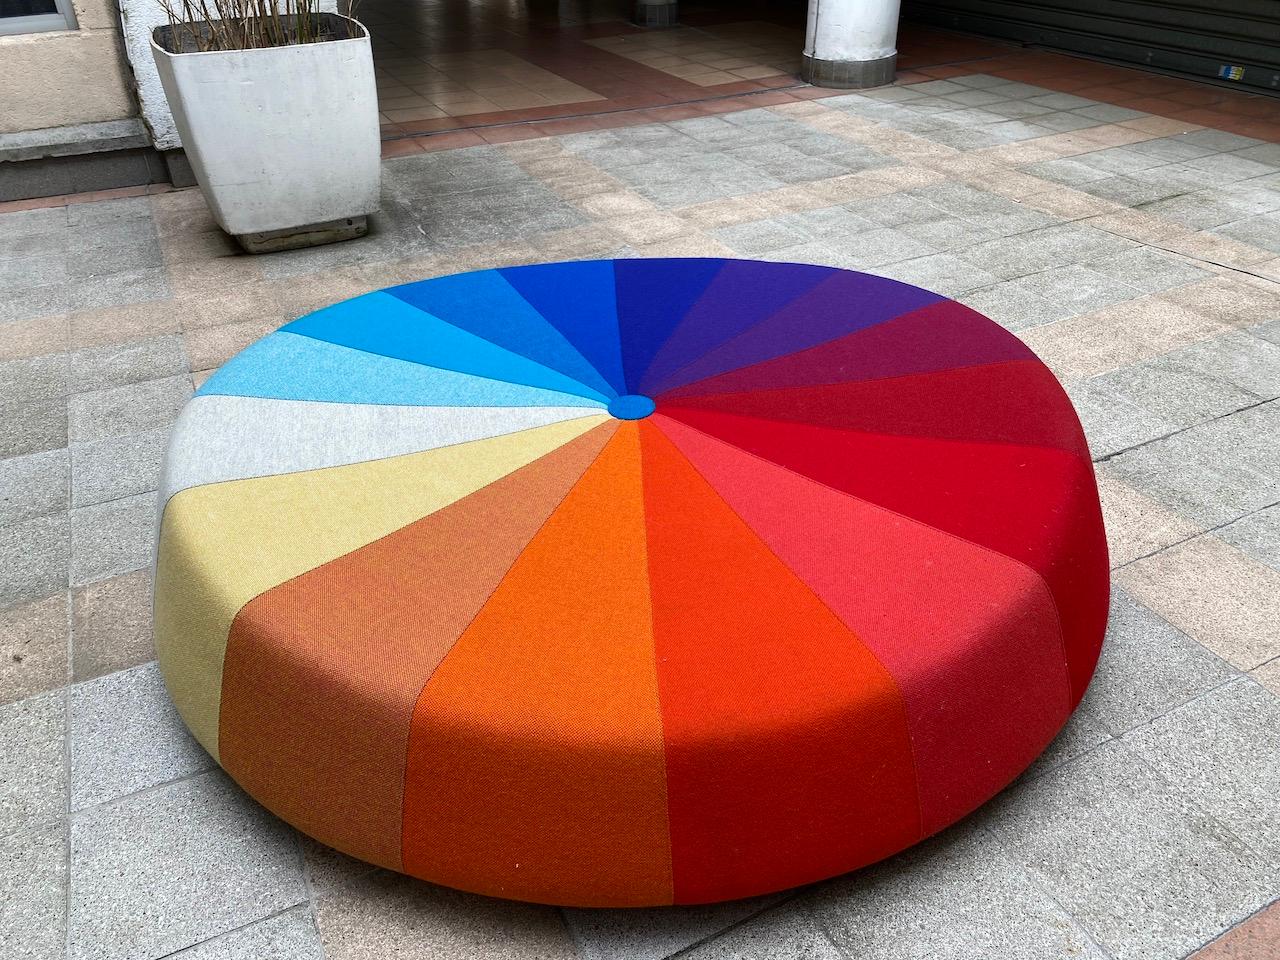 La Cividina - Circular bench, 2015.
Multicolored wool fabric
Logo /label of maker
Very decorative & superb condition
Measures: D 175 x H 40 cm.